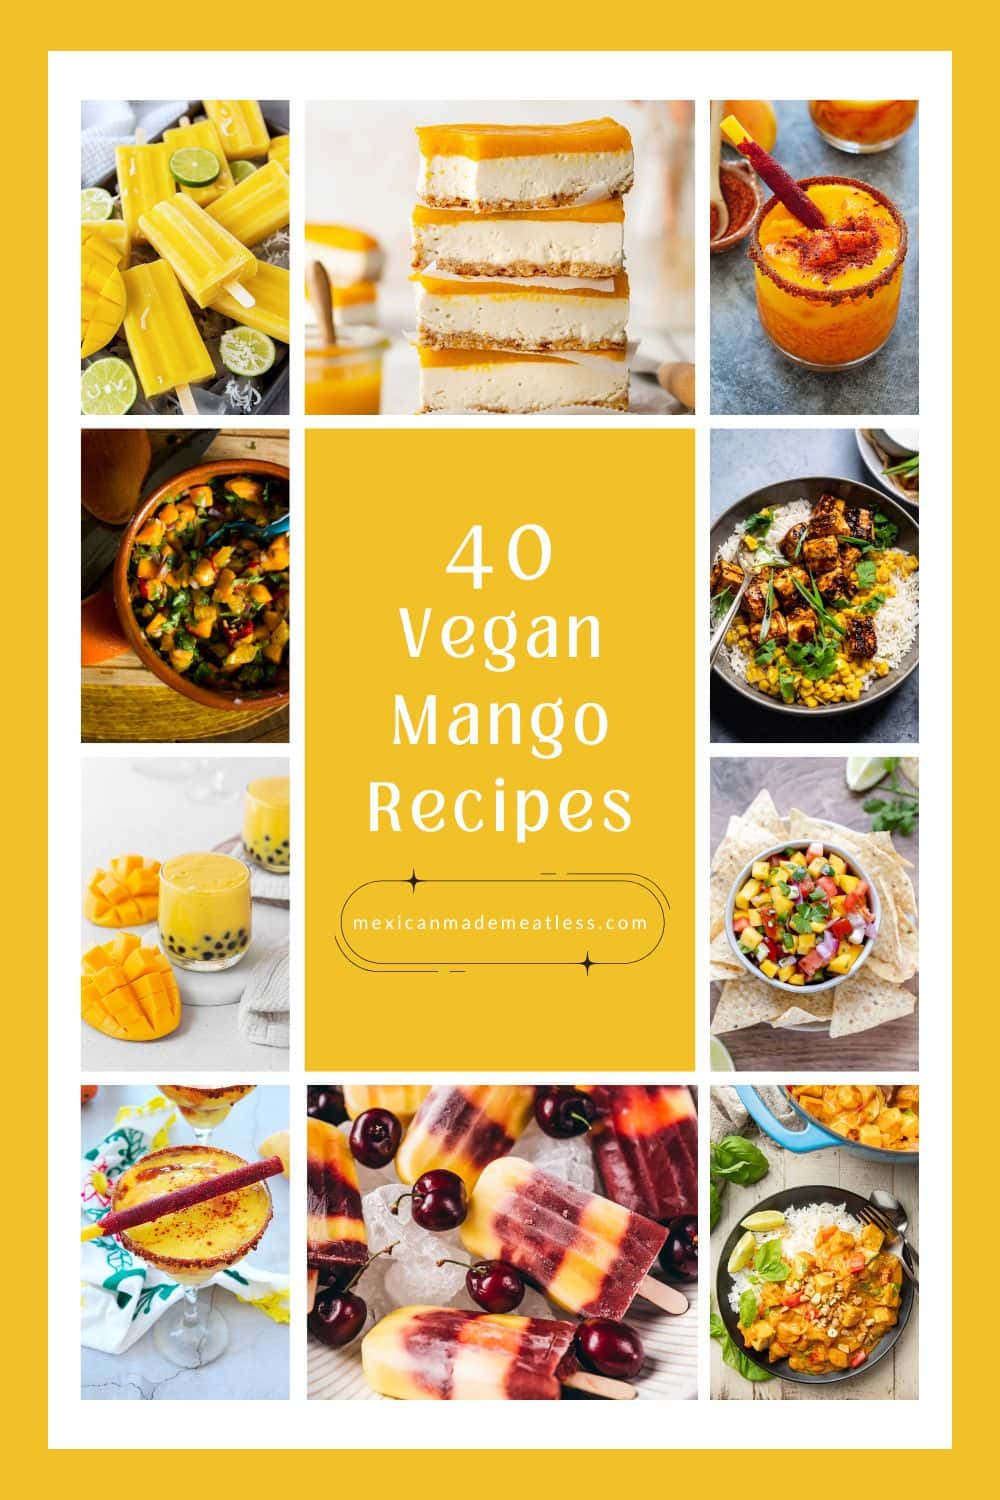 40 Vegan Mango Recipes to Try ASAP!